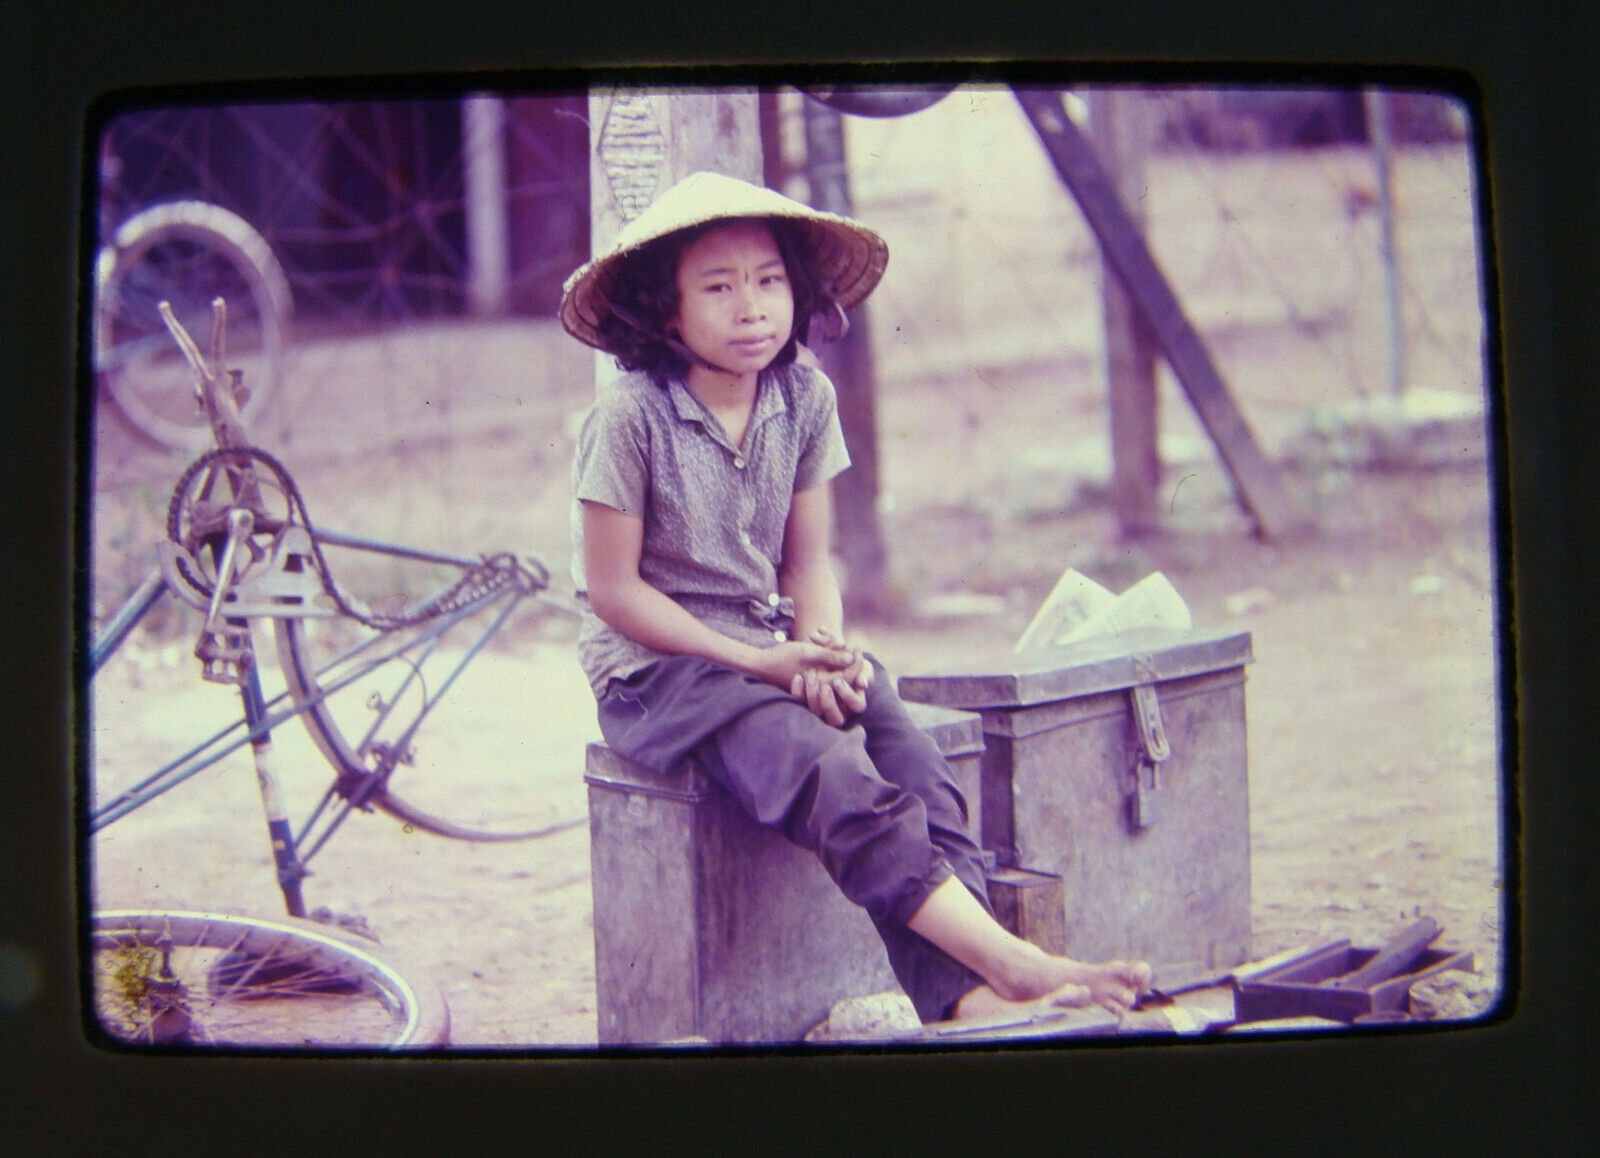 1967 Saigon Vietnamese Girl 35mm Color Slide Photo Vietnam War old